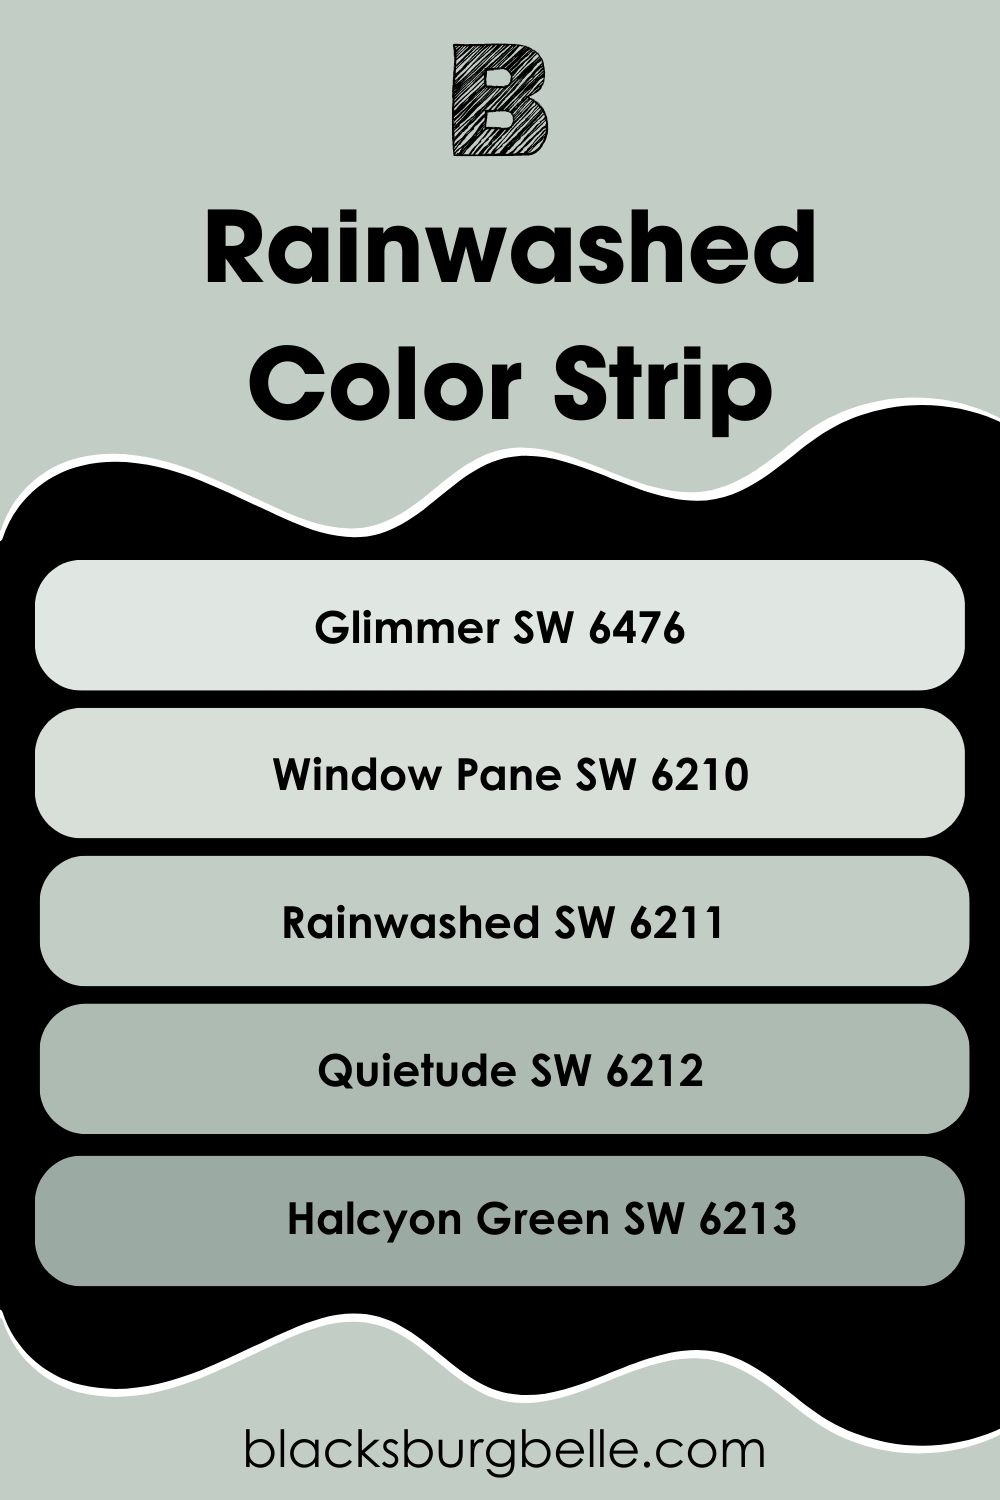 Rainwashed Color Strip